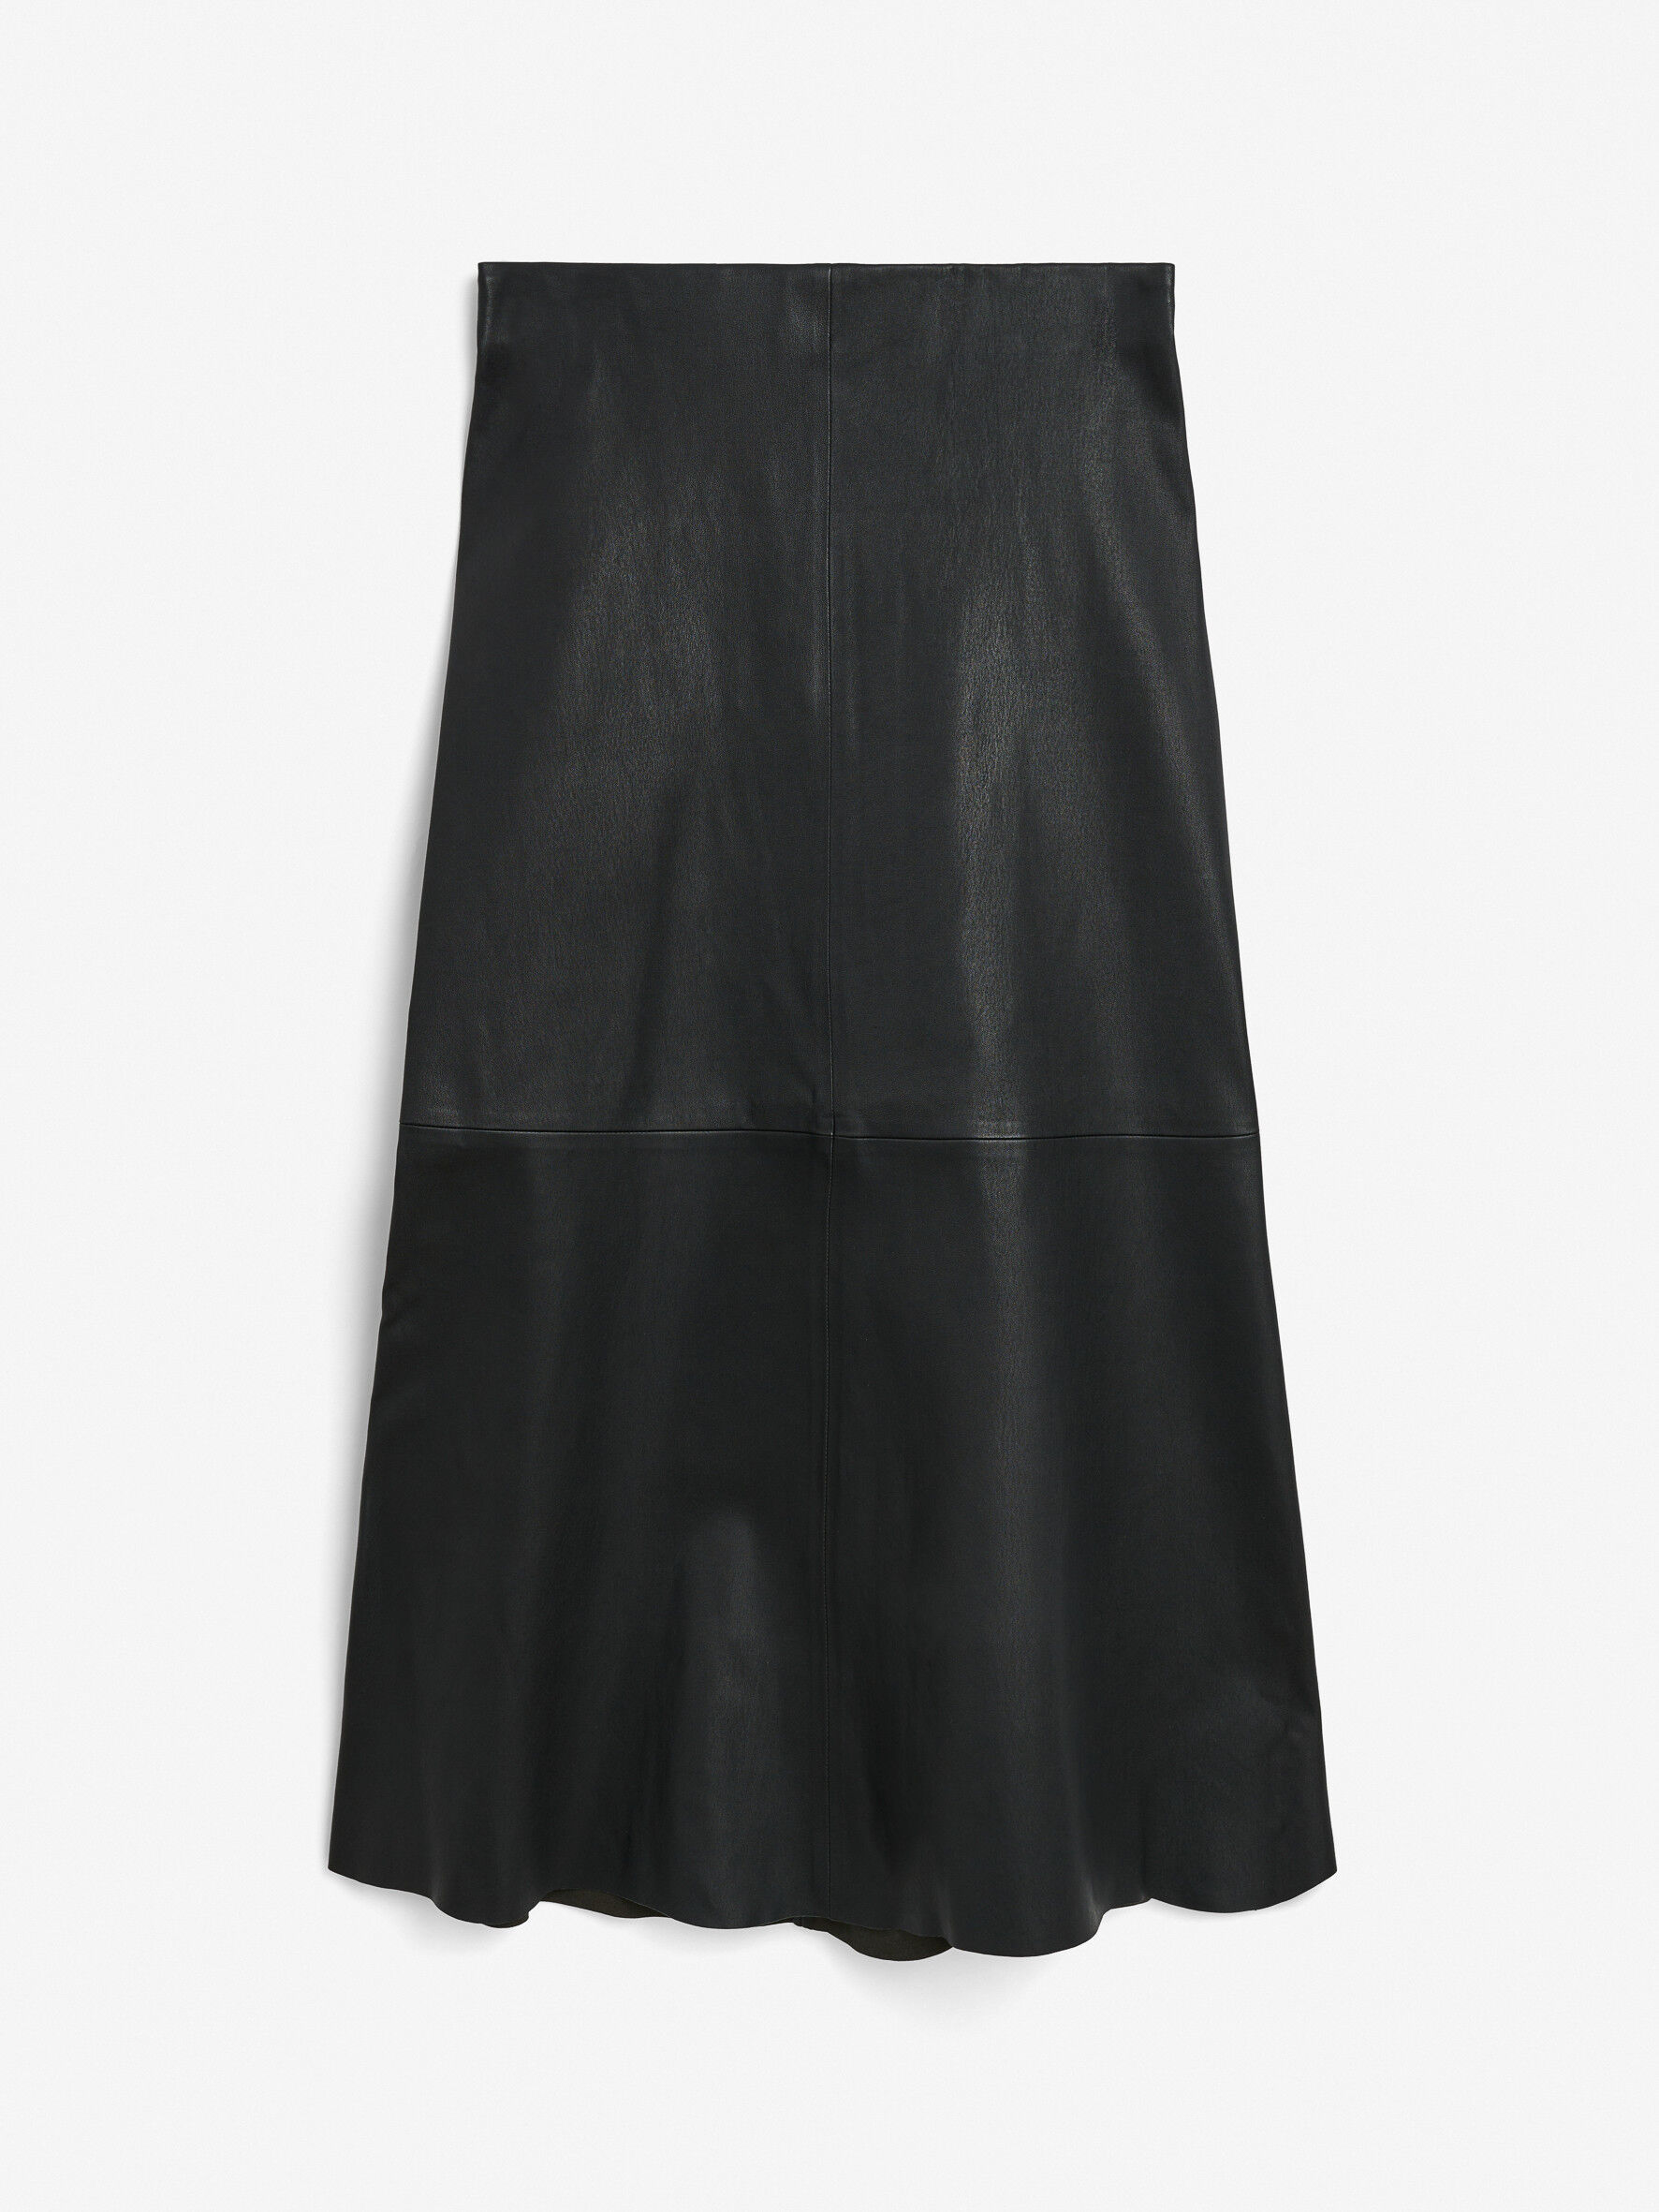 Simoas leather skirt - Buy Clothing online